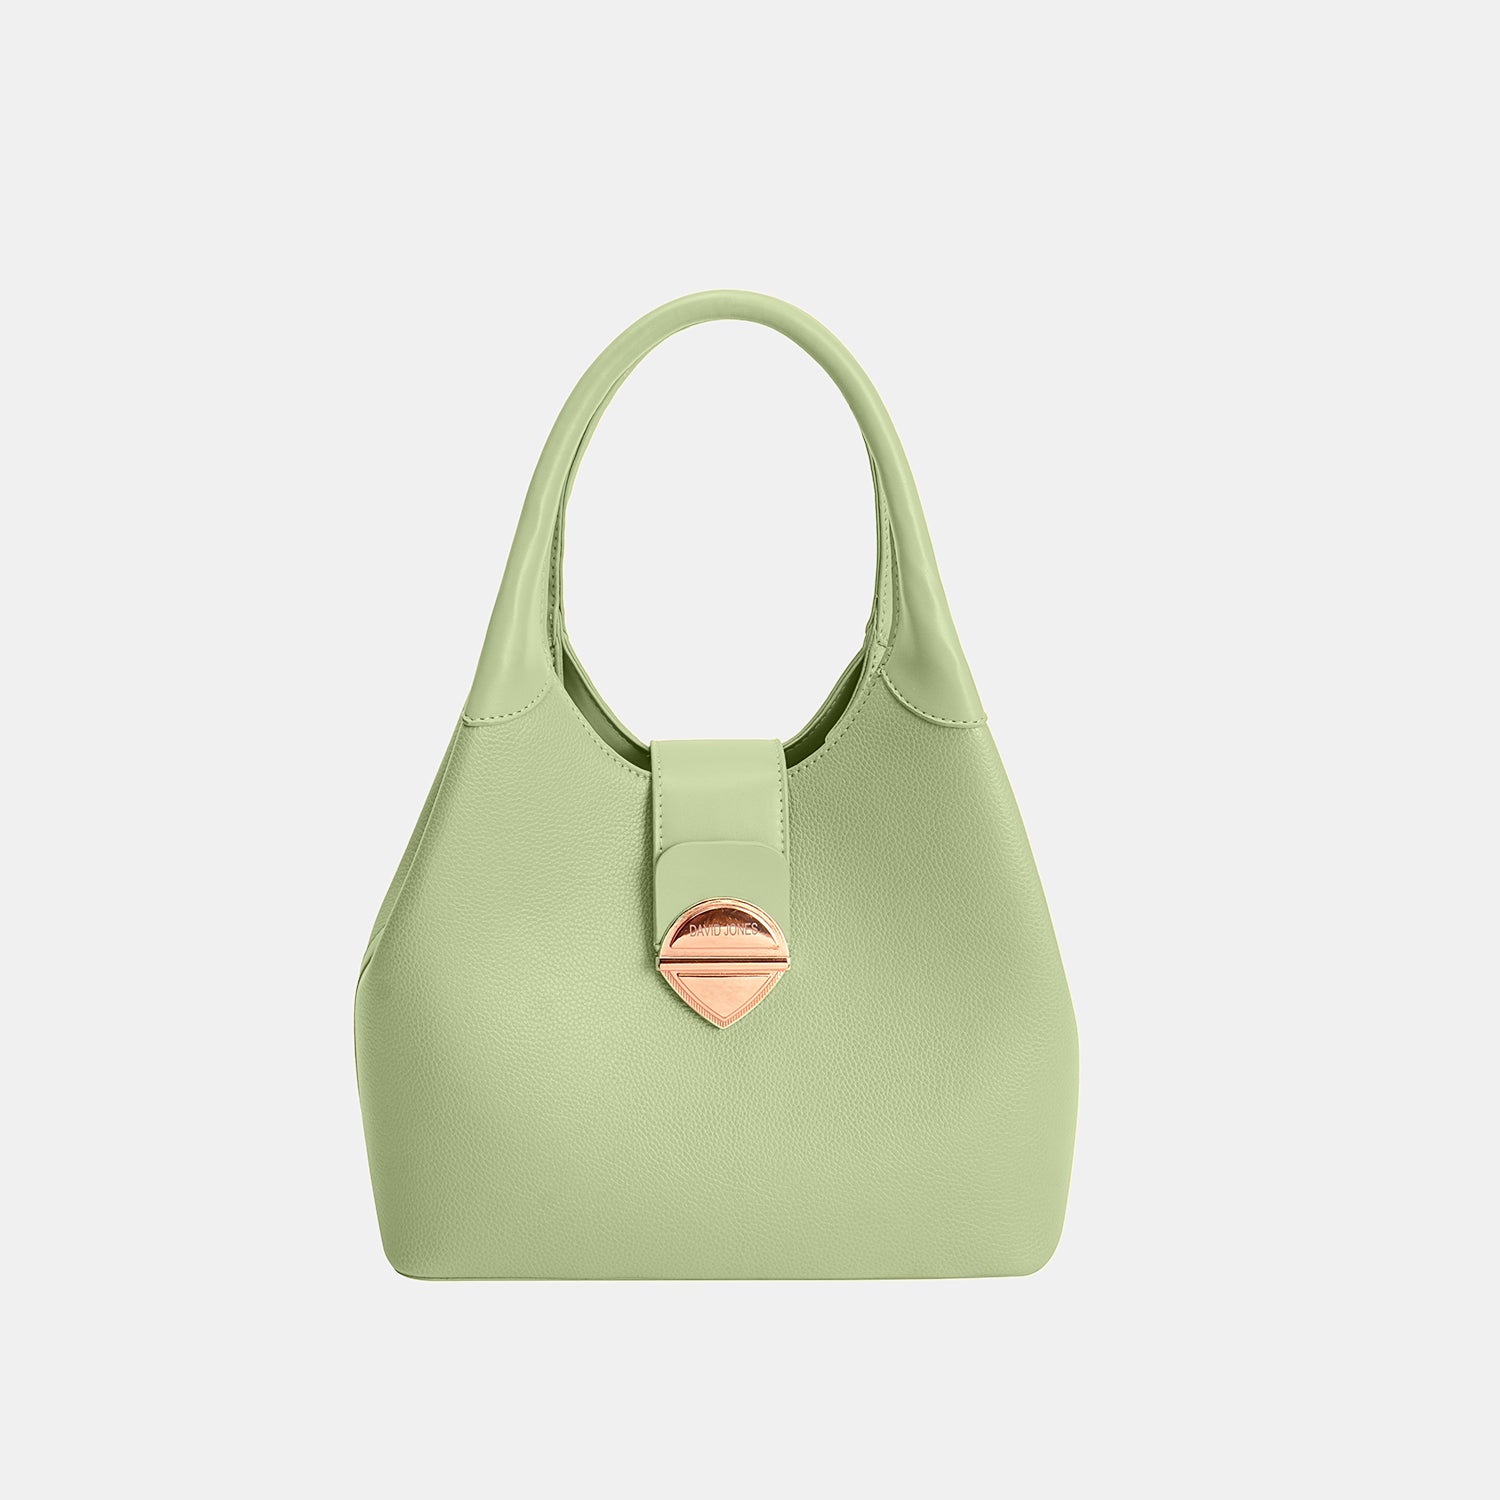 David Jones PU Leather Handbag Light Green One Size 